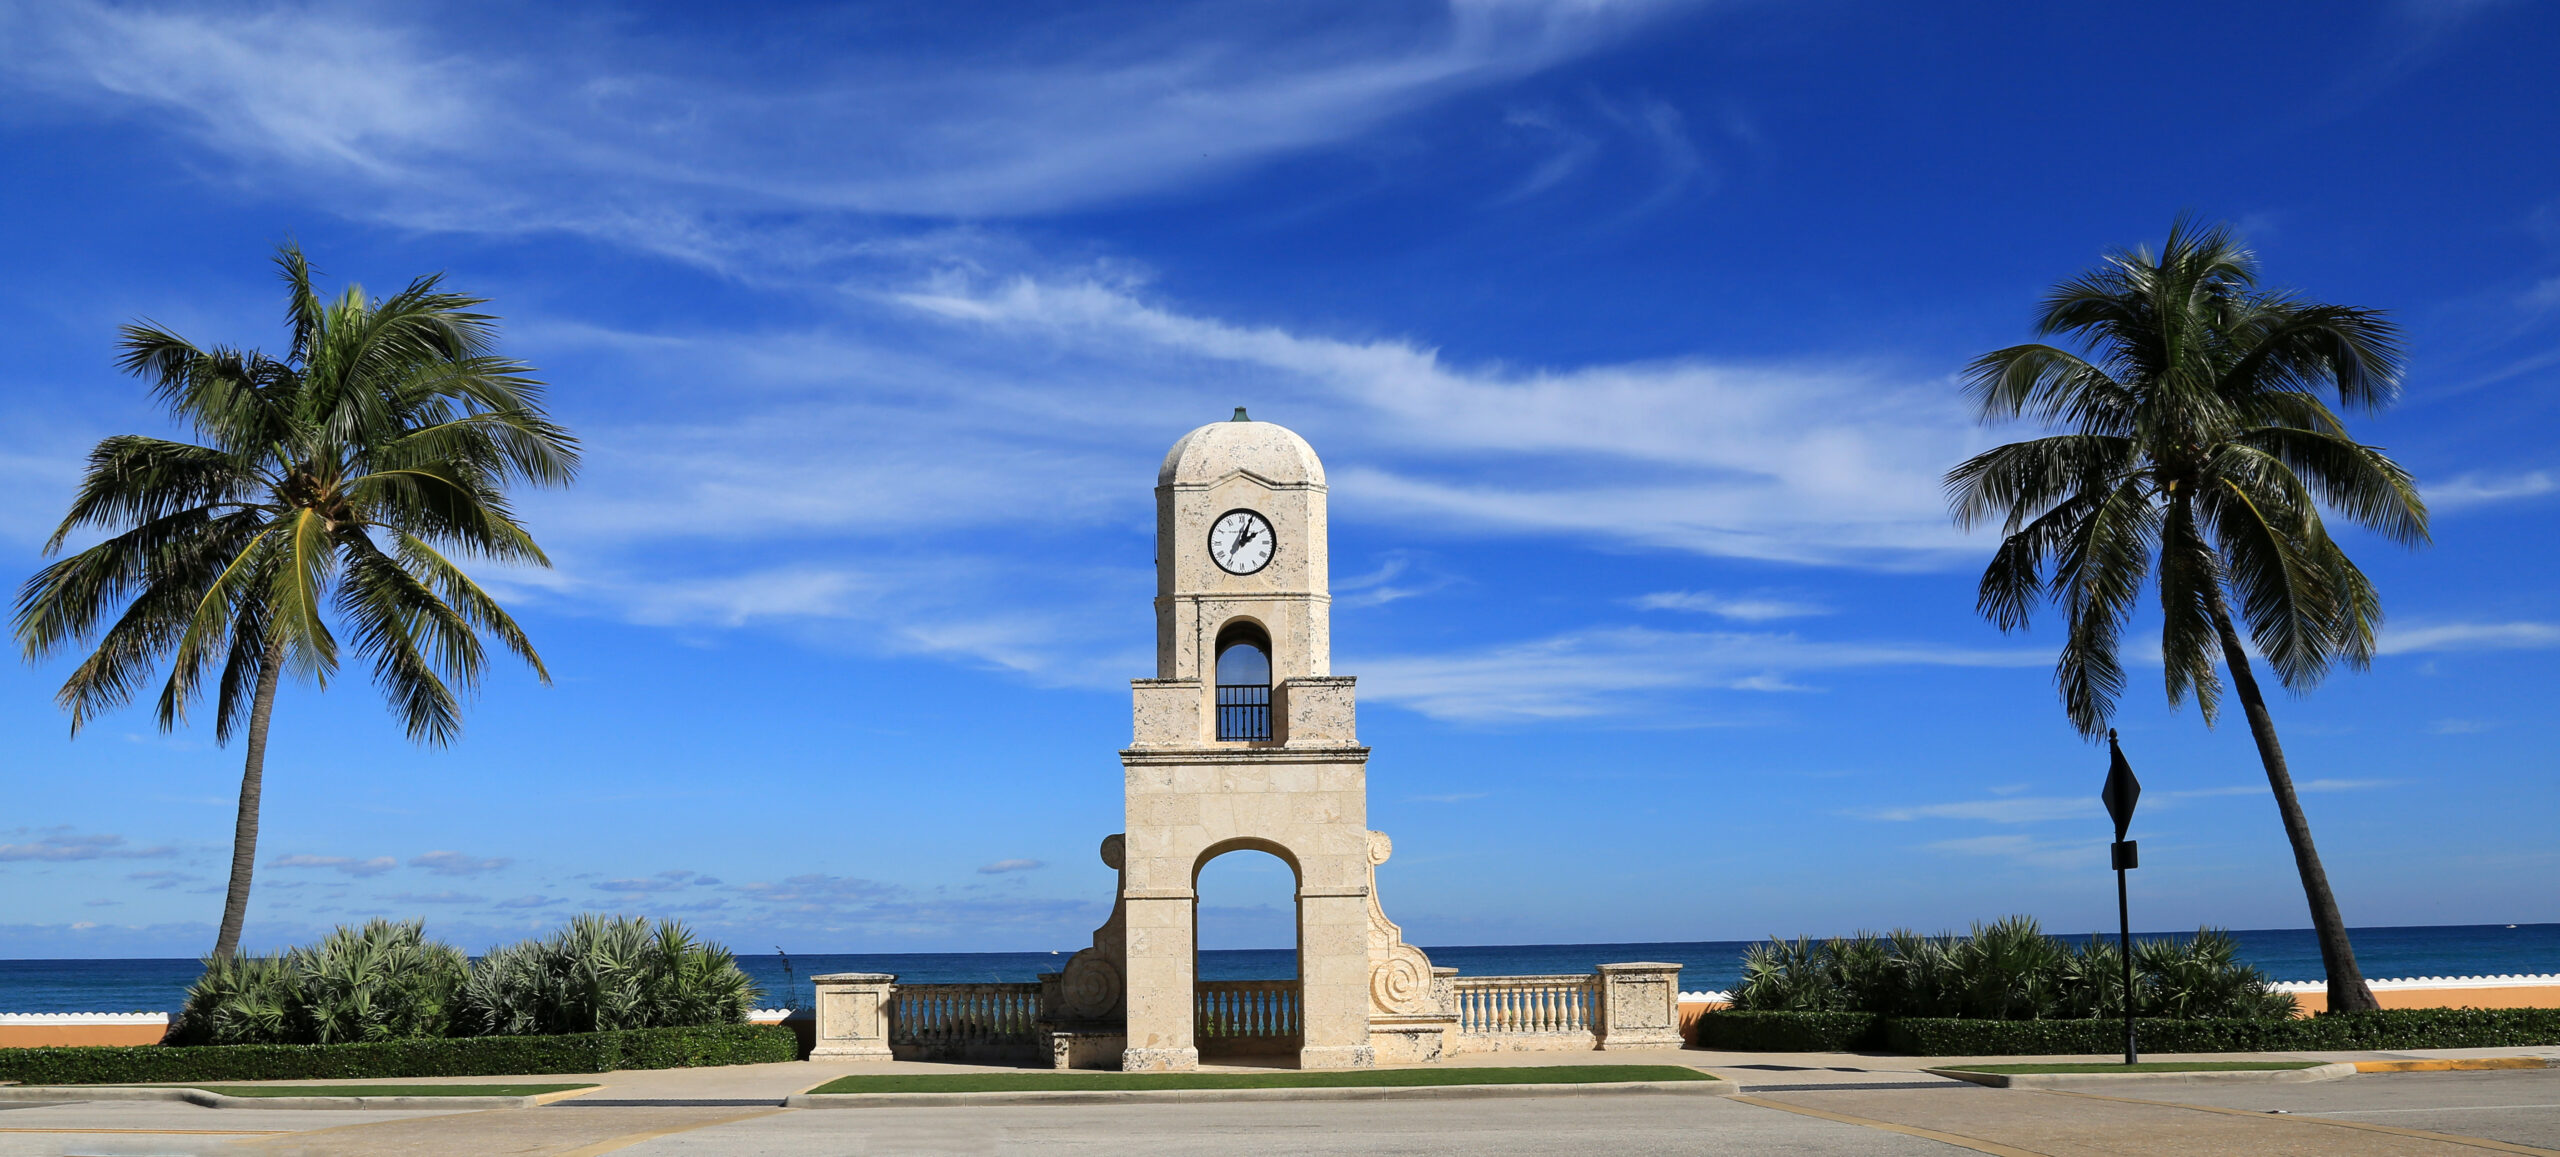 Palm Beach Clocktower